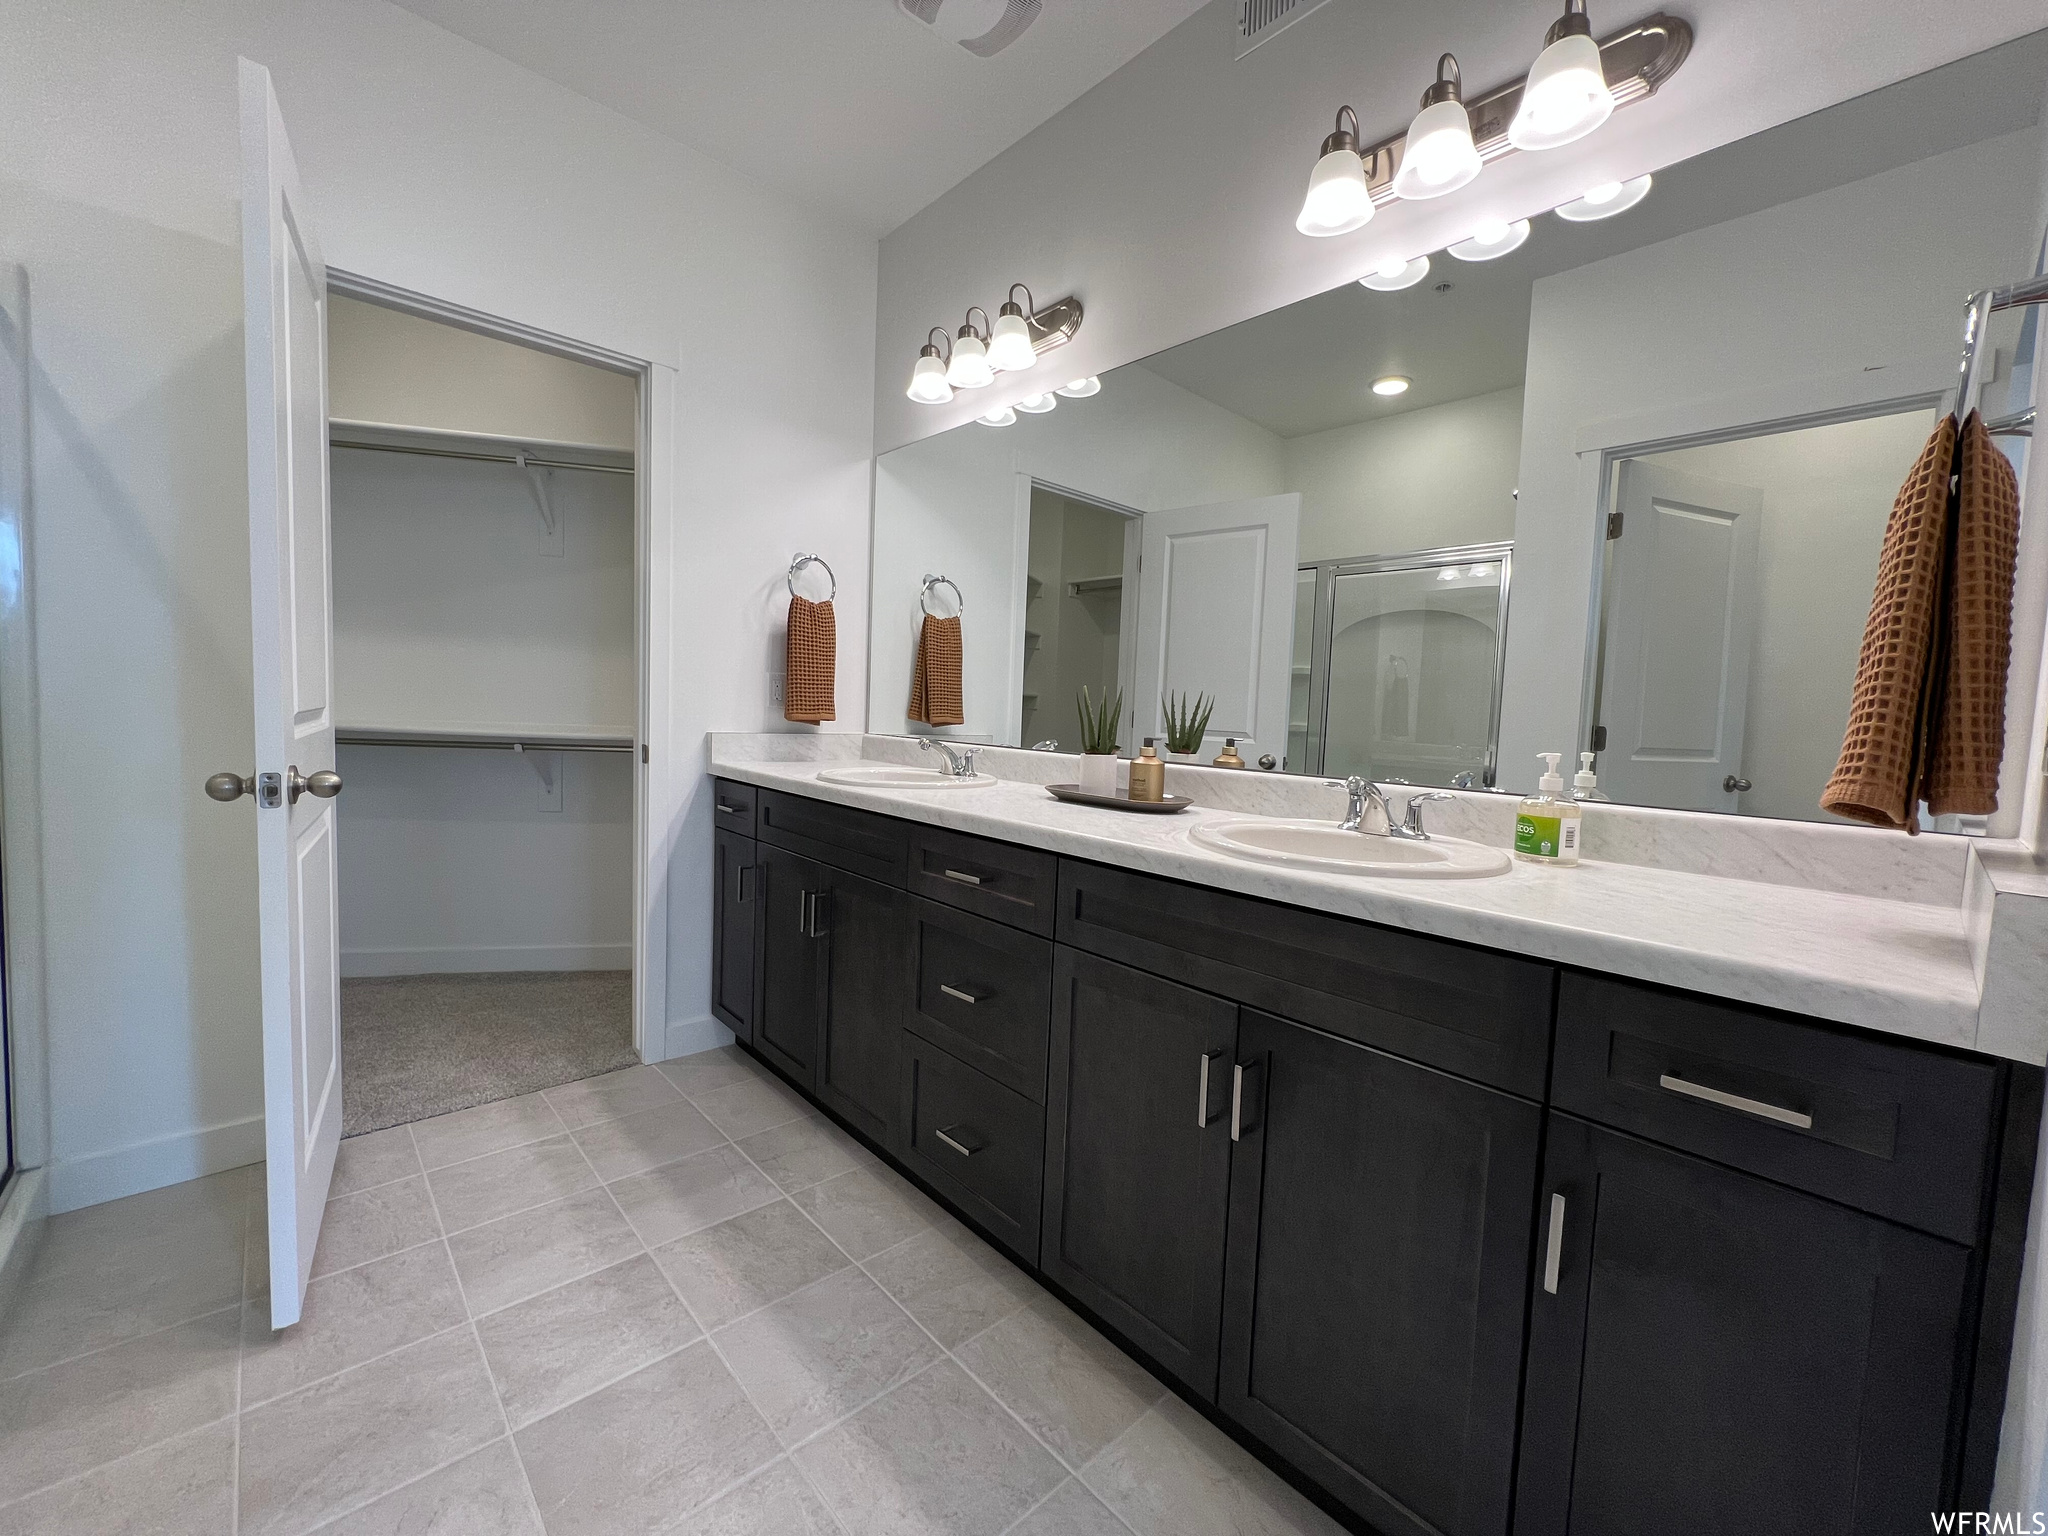 Bathroom with double sink, tile flooring, and oversized vanity